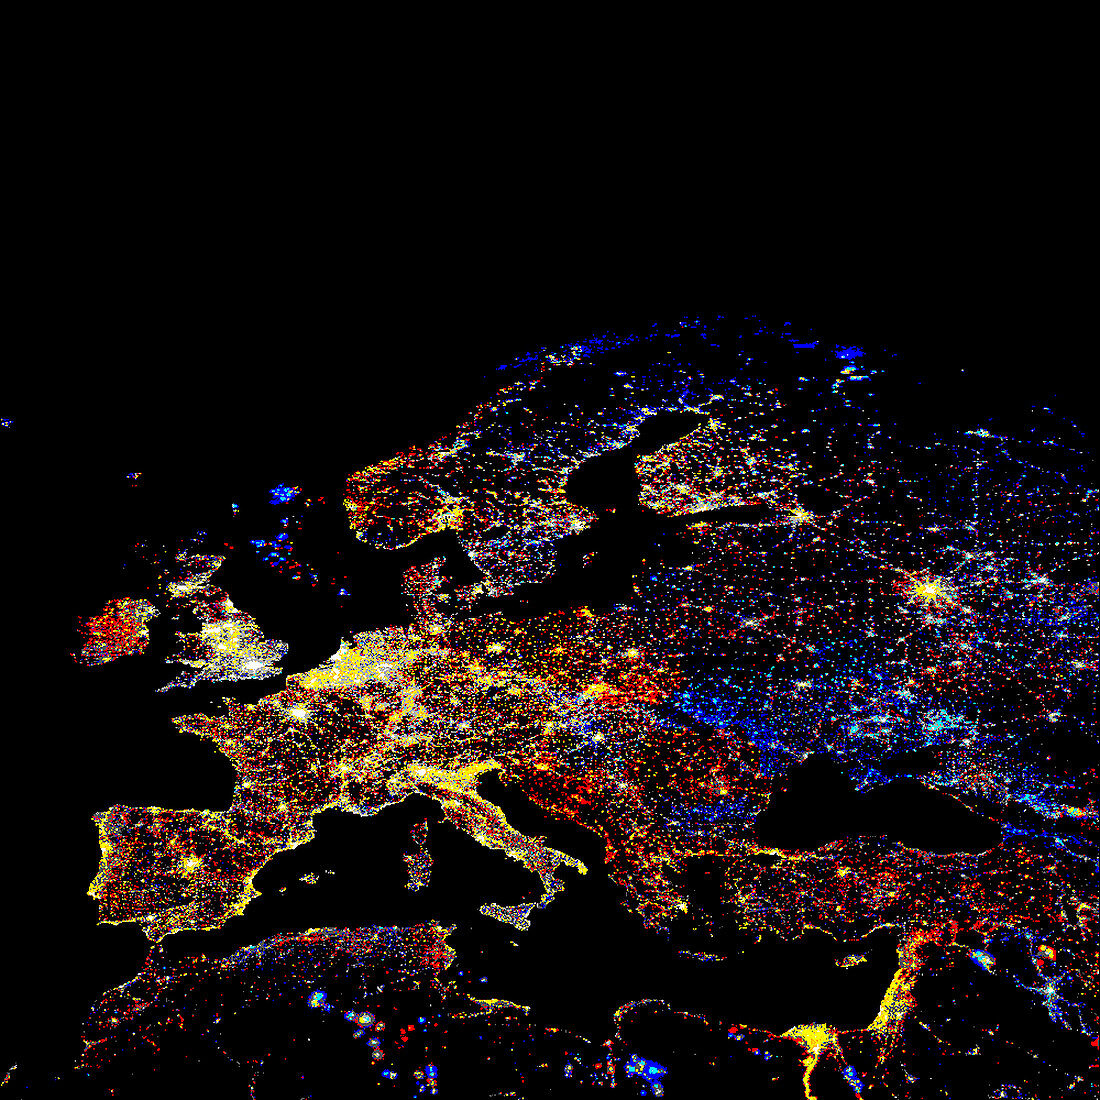 Europe at night,1993-2003 changes